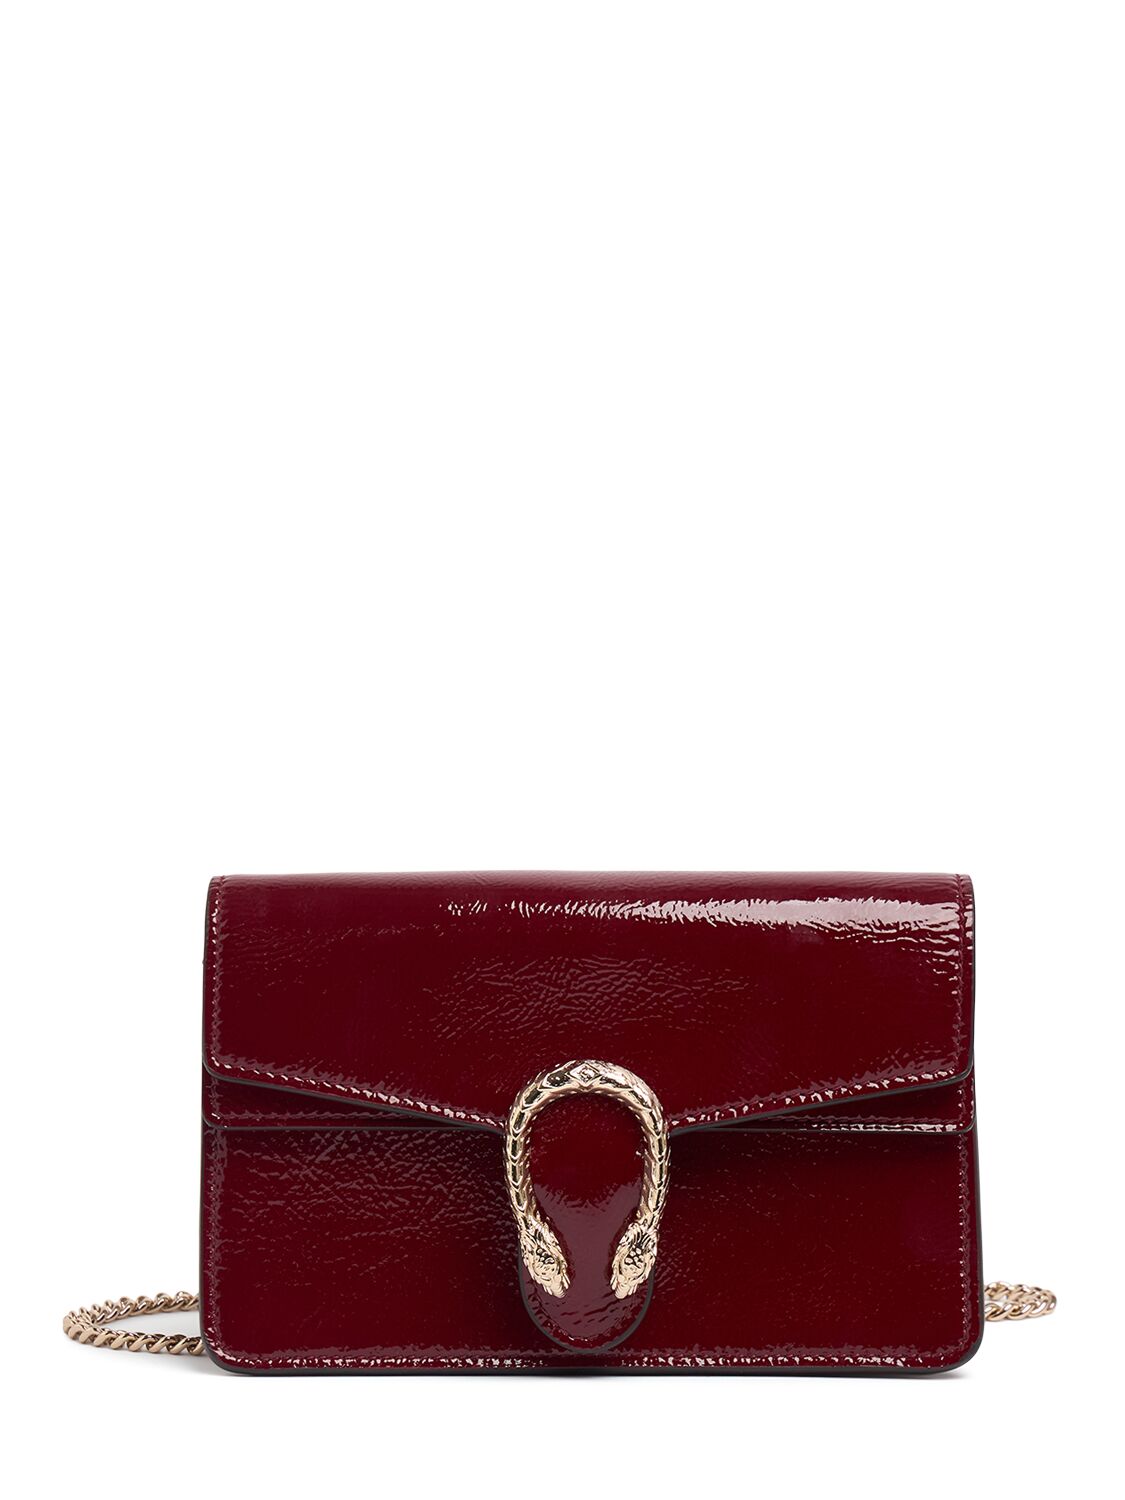 Gucci Mini Dionysus Patent Leather Bag In Rosso Ancora